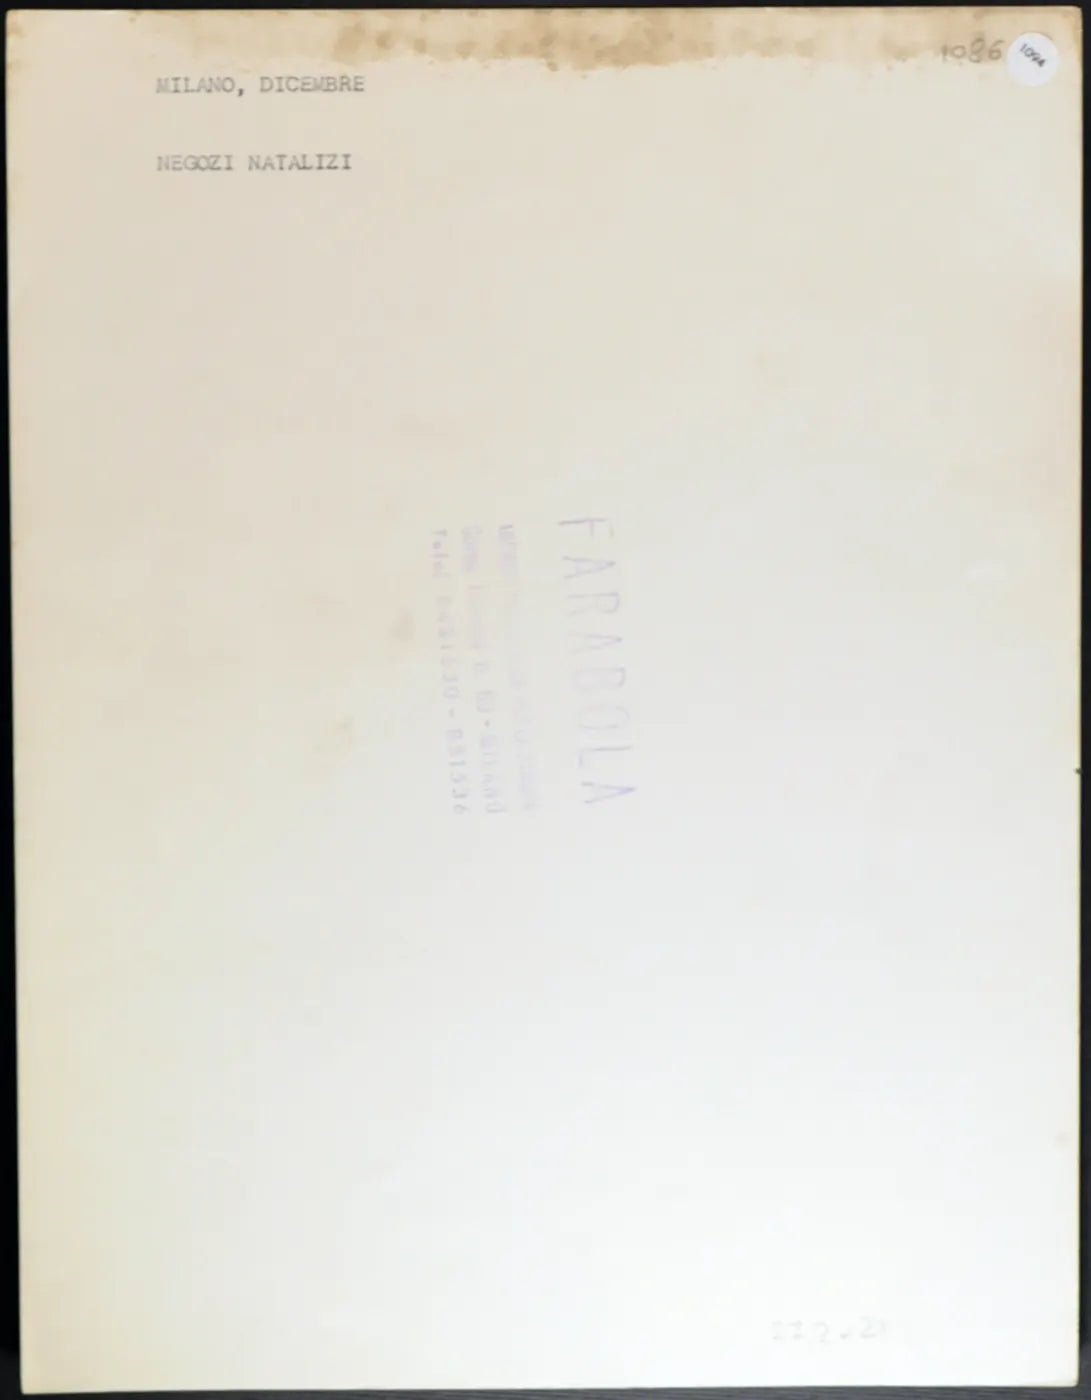 Milano Bancarelle natalizie anni 70 Ft 1094 - Stampa 21x27 cm - Farabola Stampa ai sali d'argento